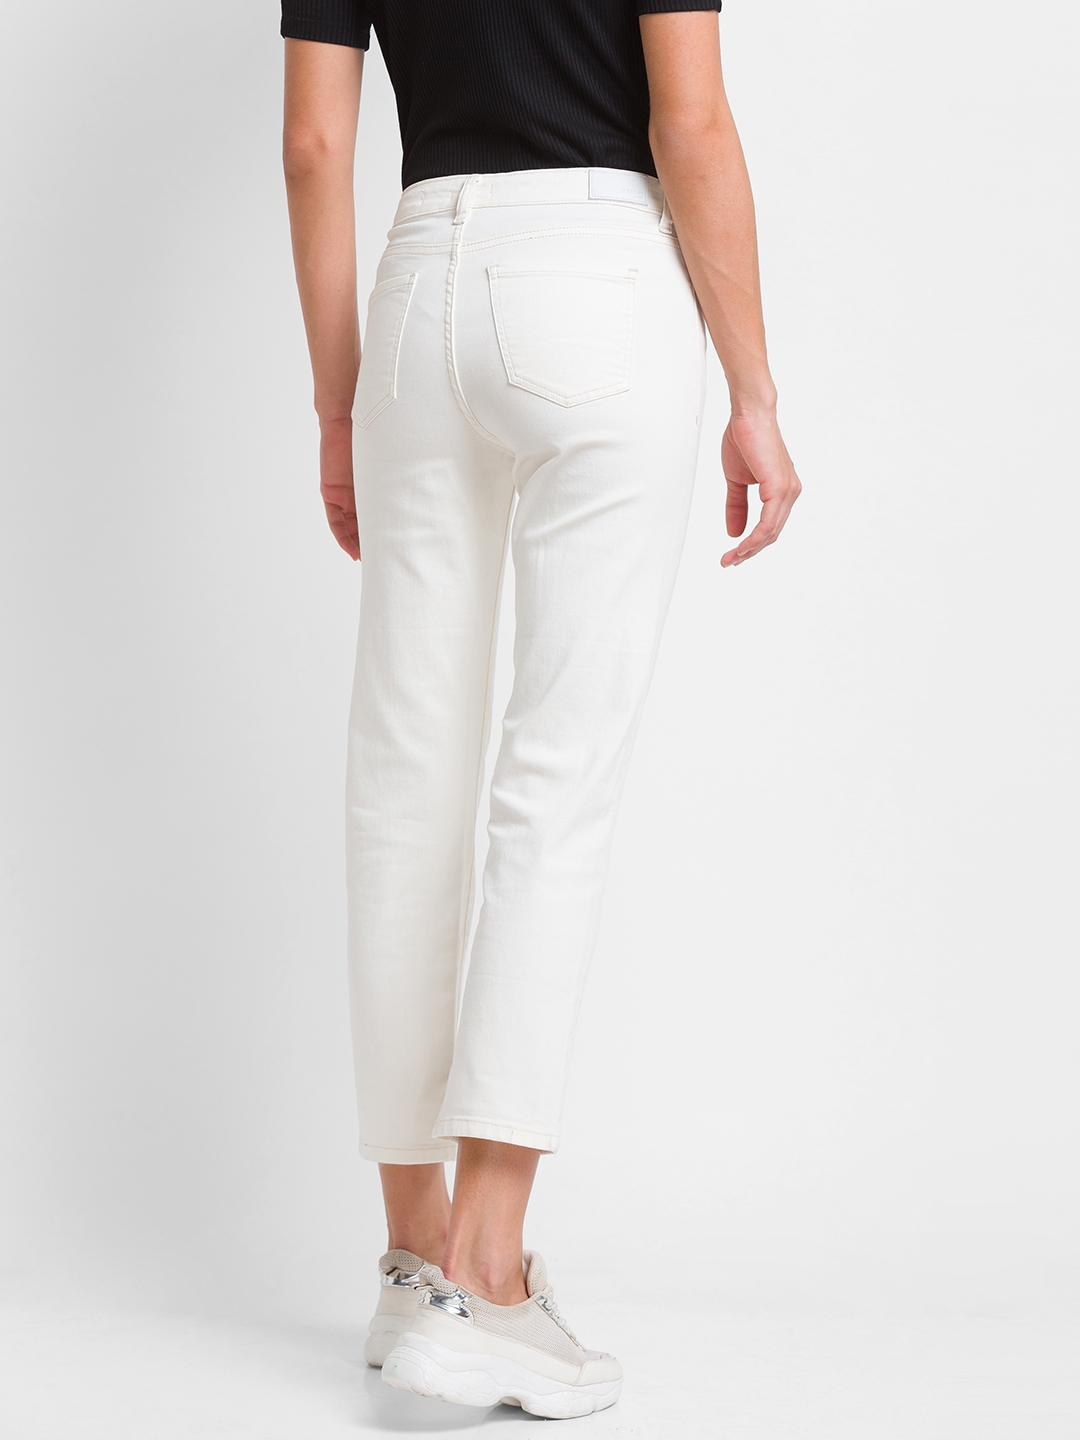 spykar | Women's White Lycra Solid Slim Jeans 2